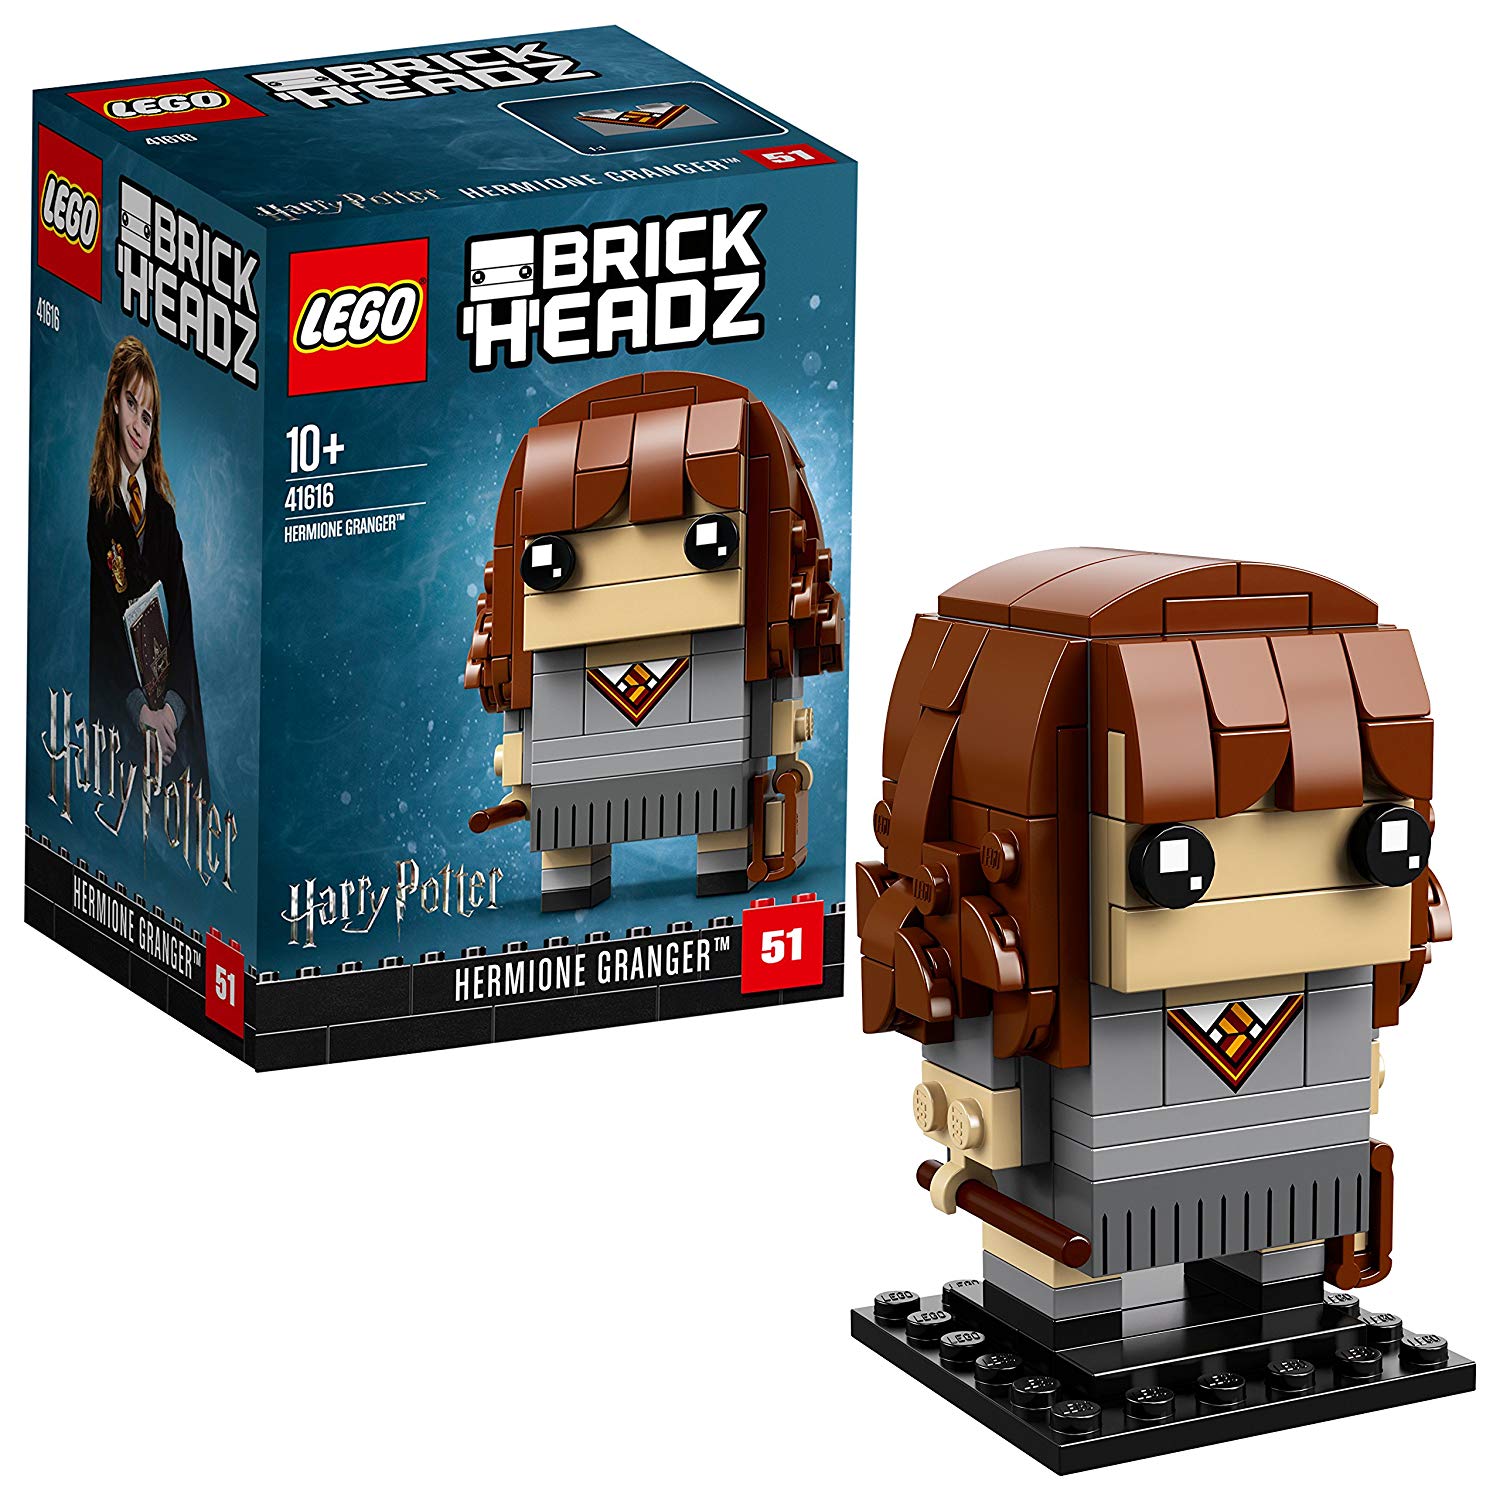 Lego Brickheadz Hermione Granger Popular Toy